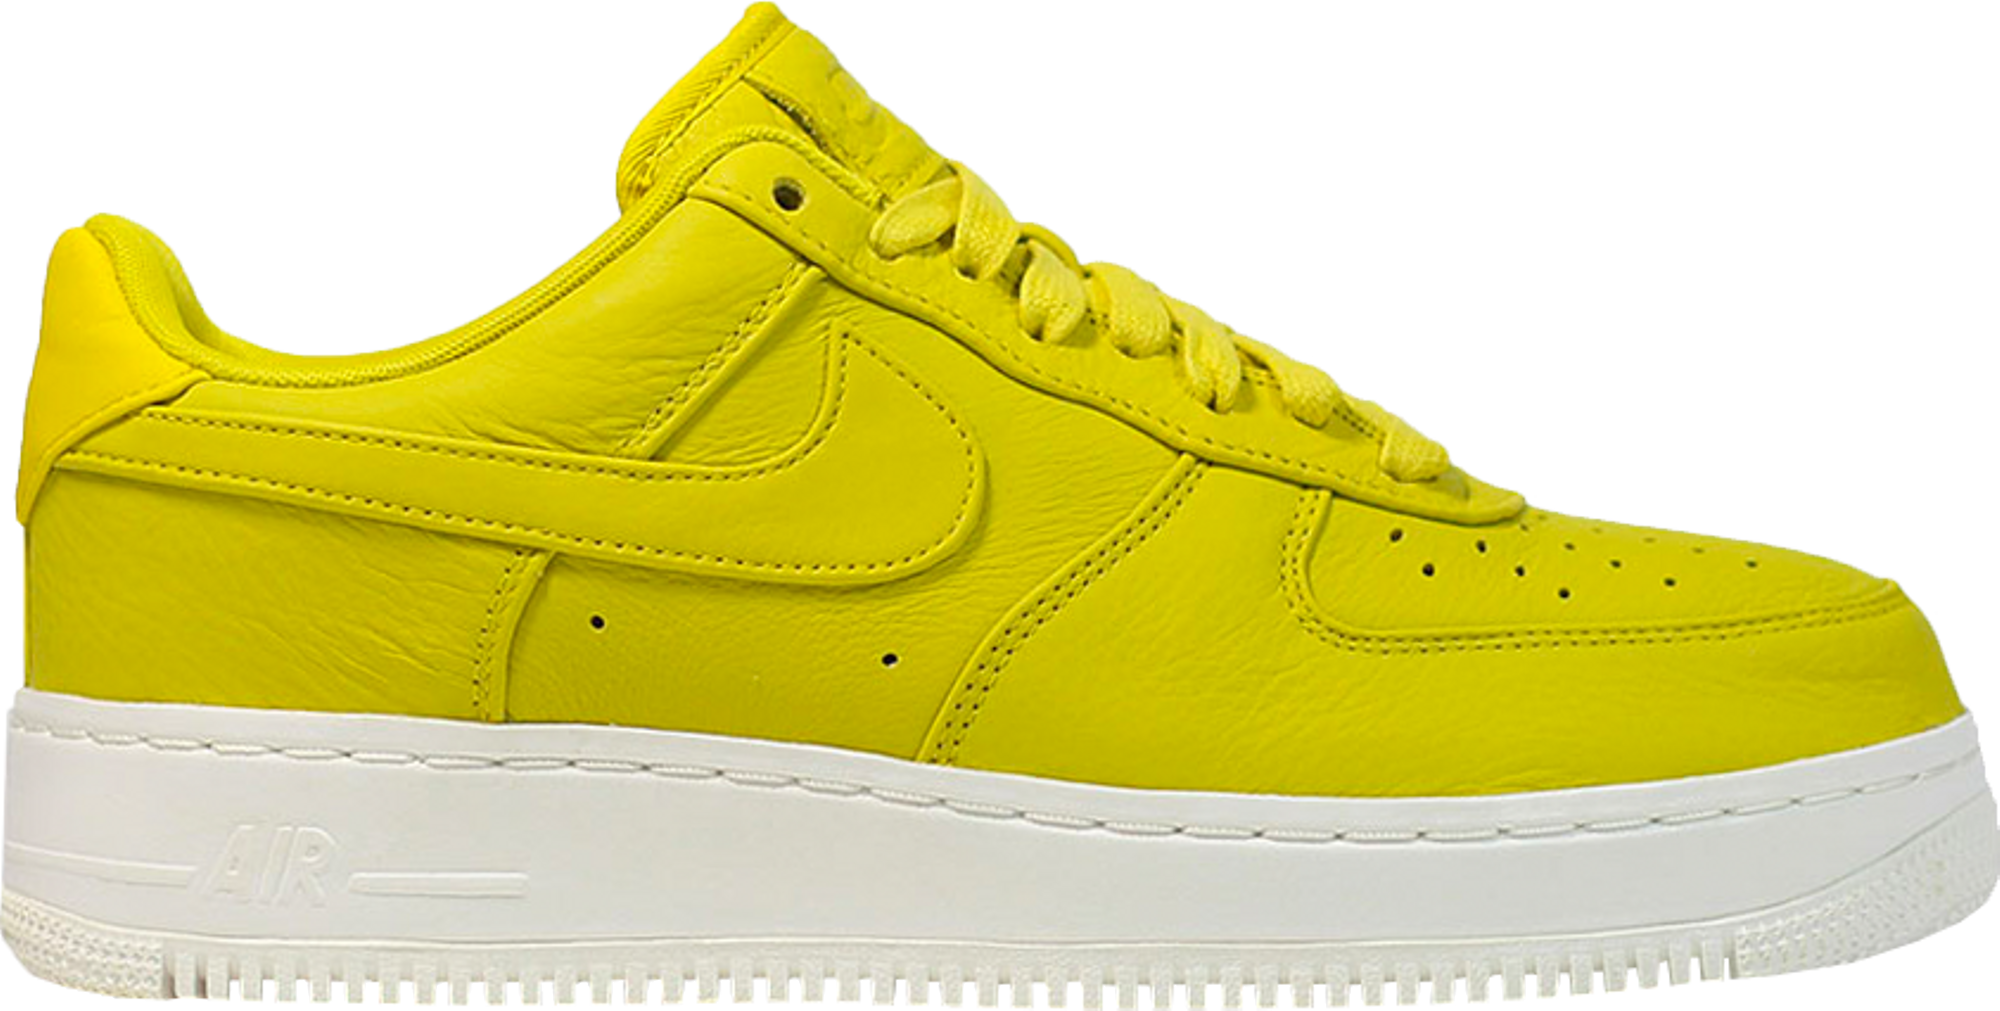 Buy NikeLab Air Force 1 Low 'Citron' - 905618 701 - Yellow | GOAT